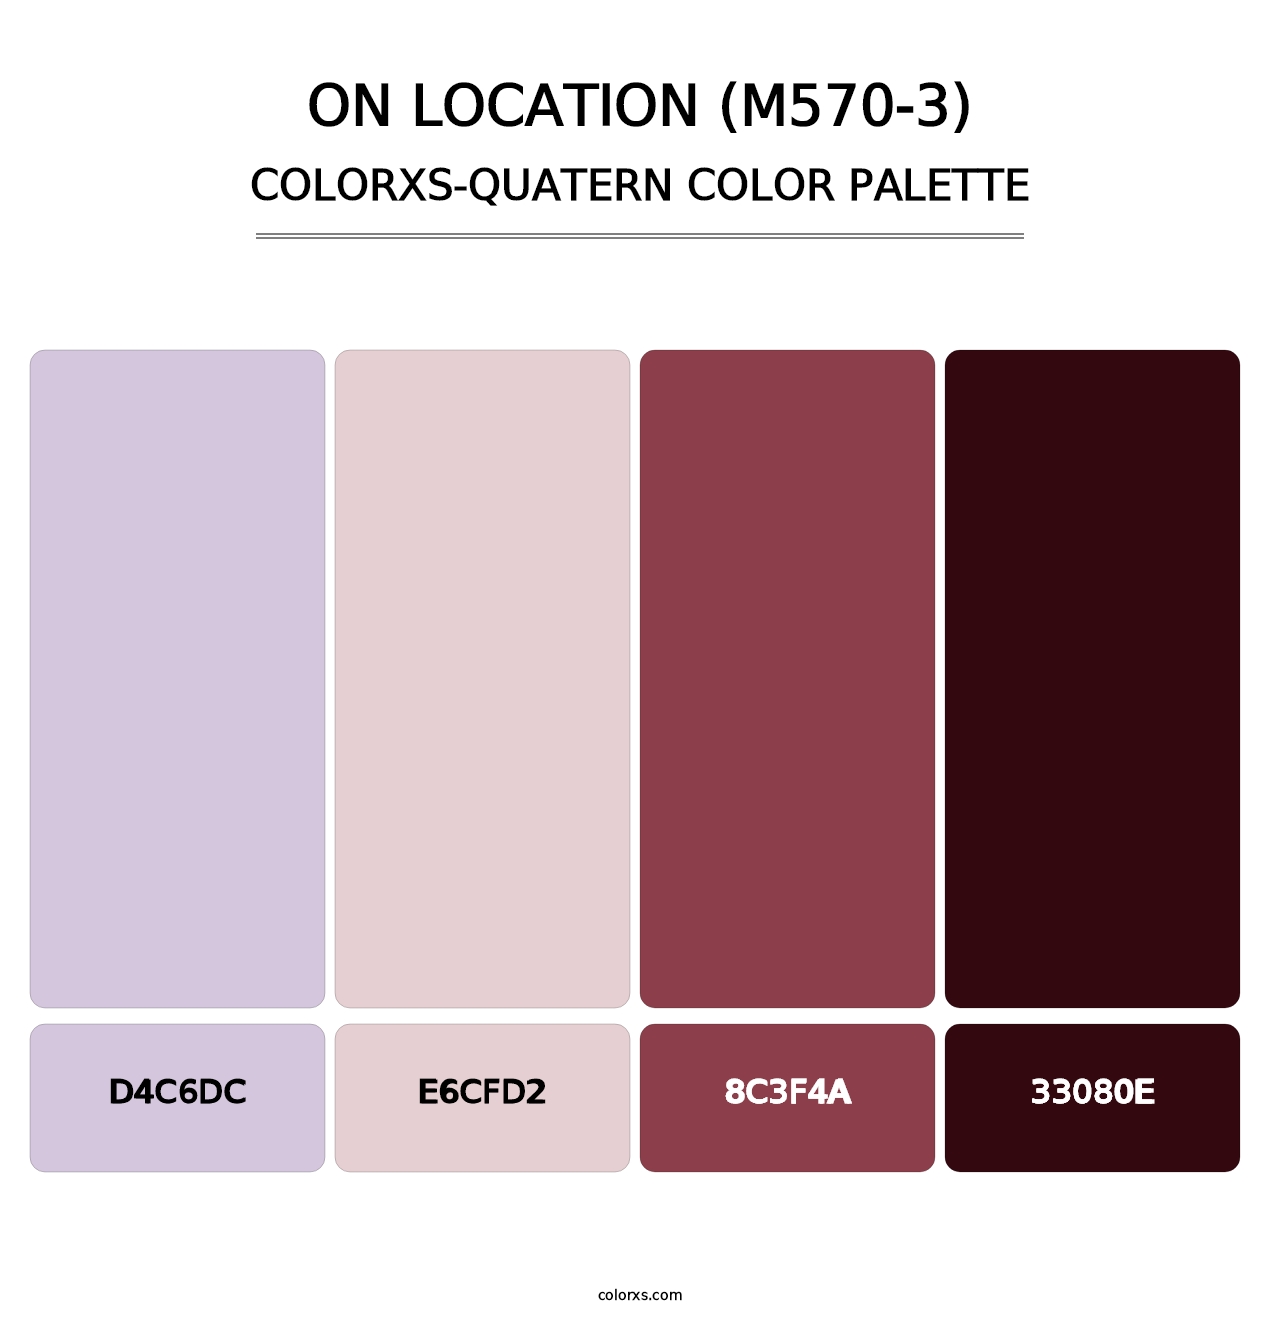 On Location (M570-3) - Colorxs Quatern Palette